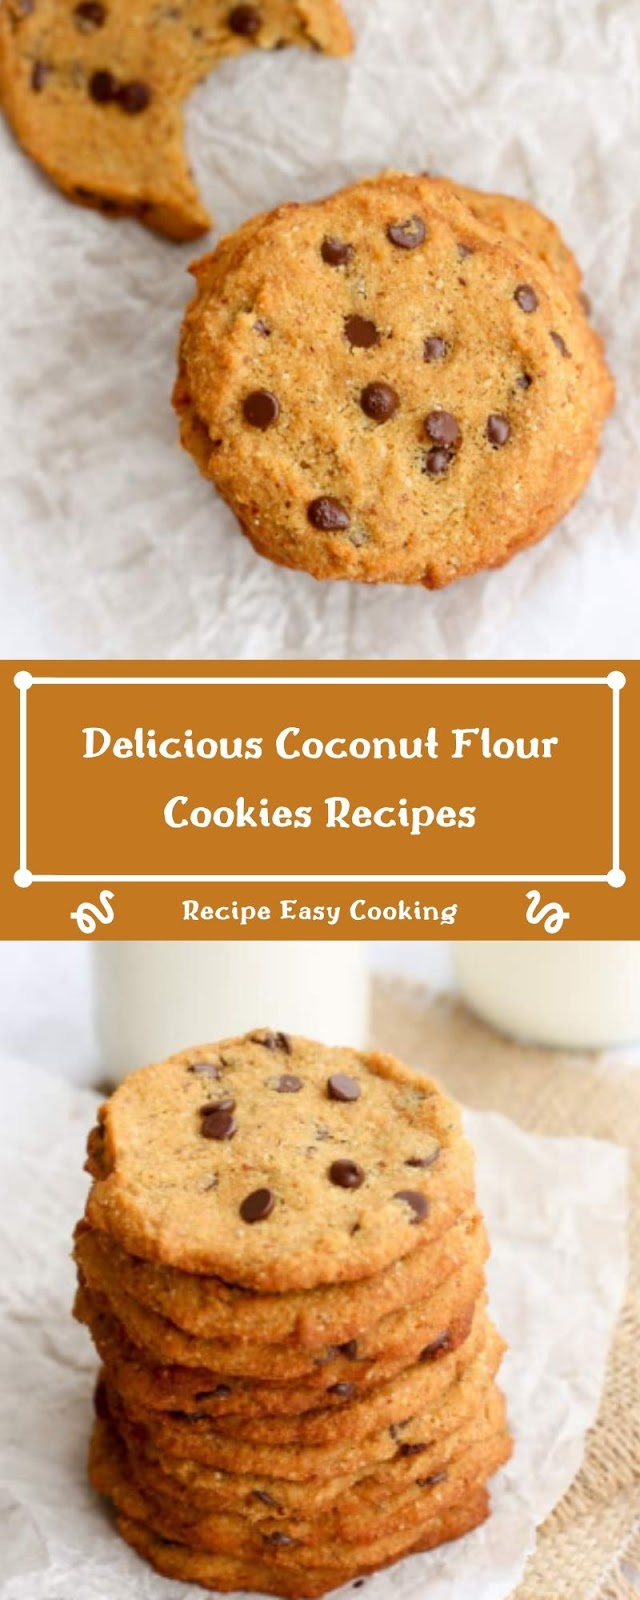 Delicious Coconut Flour Cookies Recipes